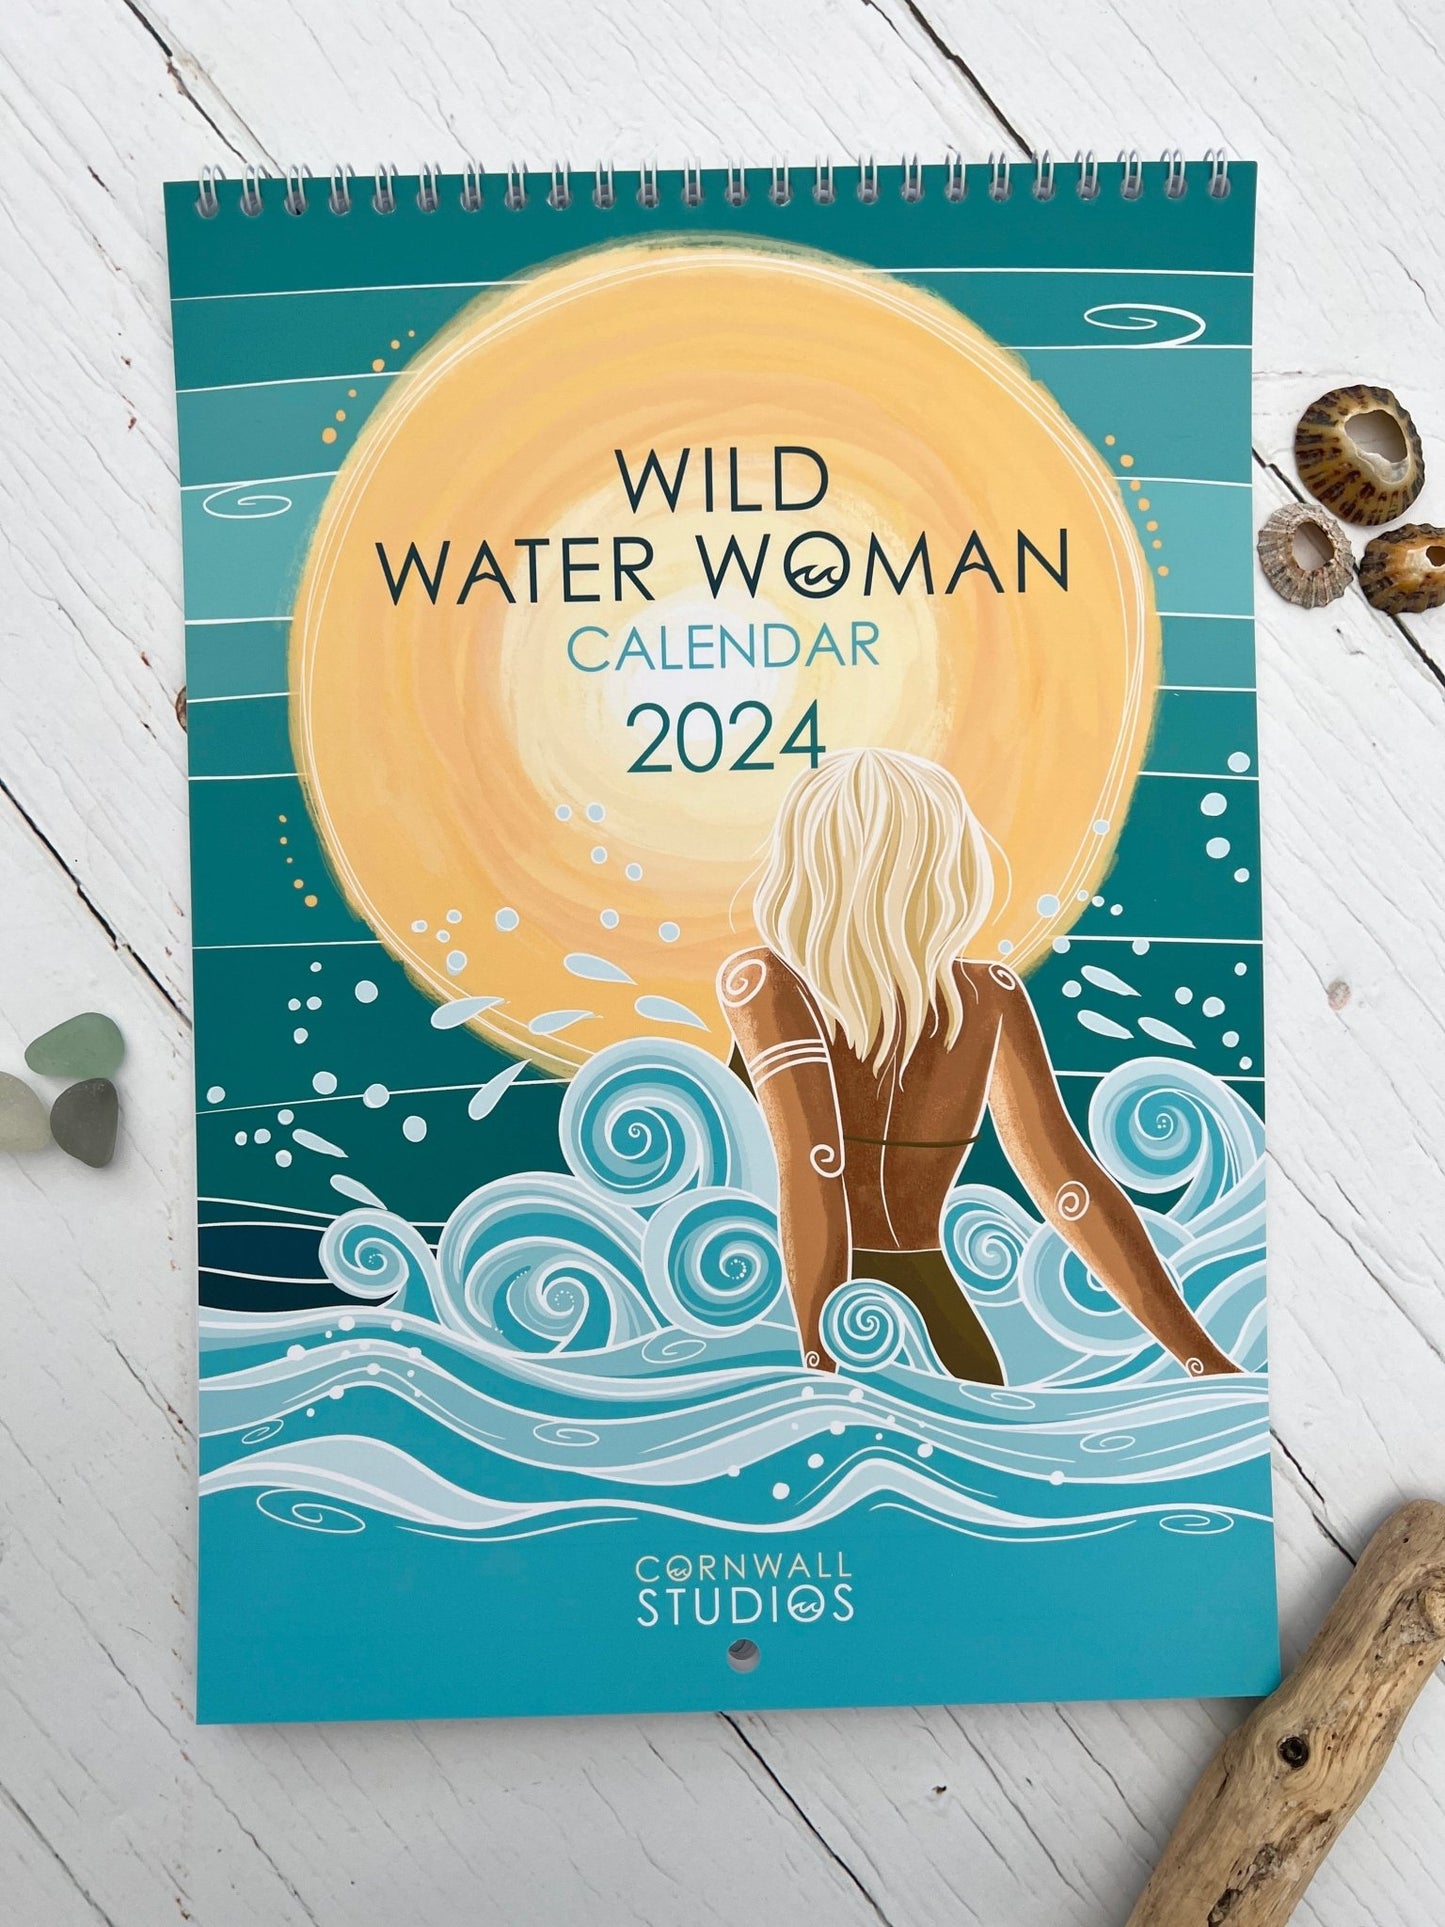 Wild Water Woman 2024 Calendar 🗓️ - Readymoney Beach Shop